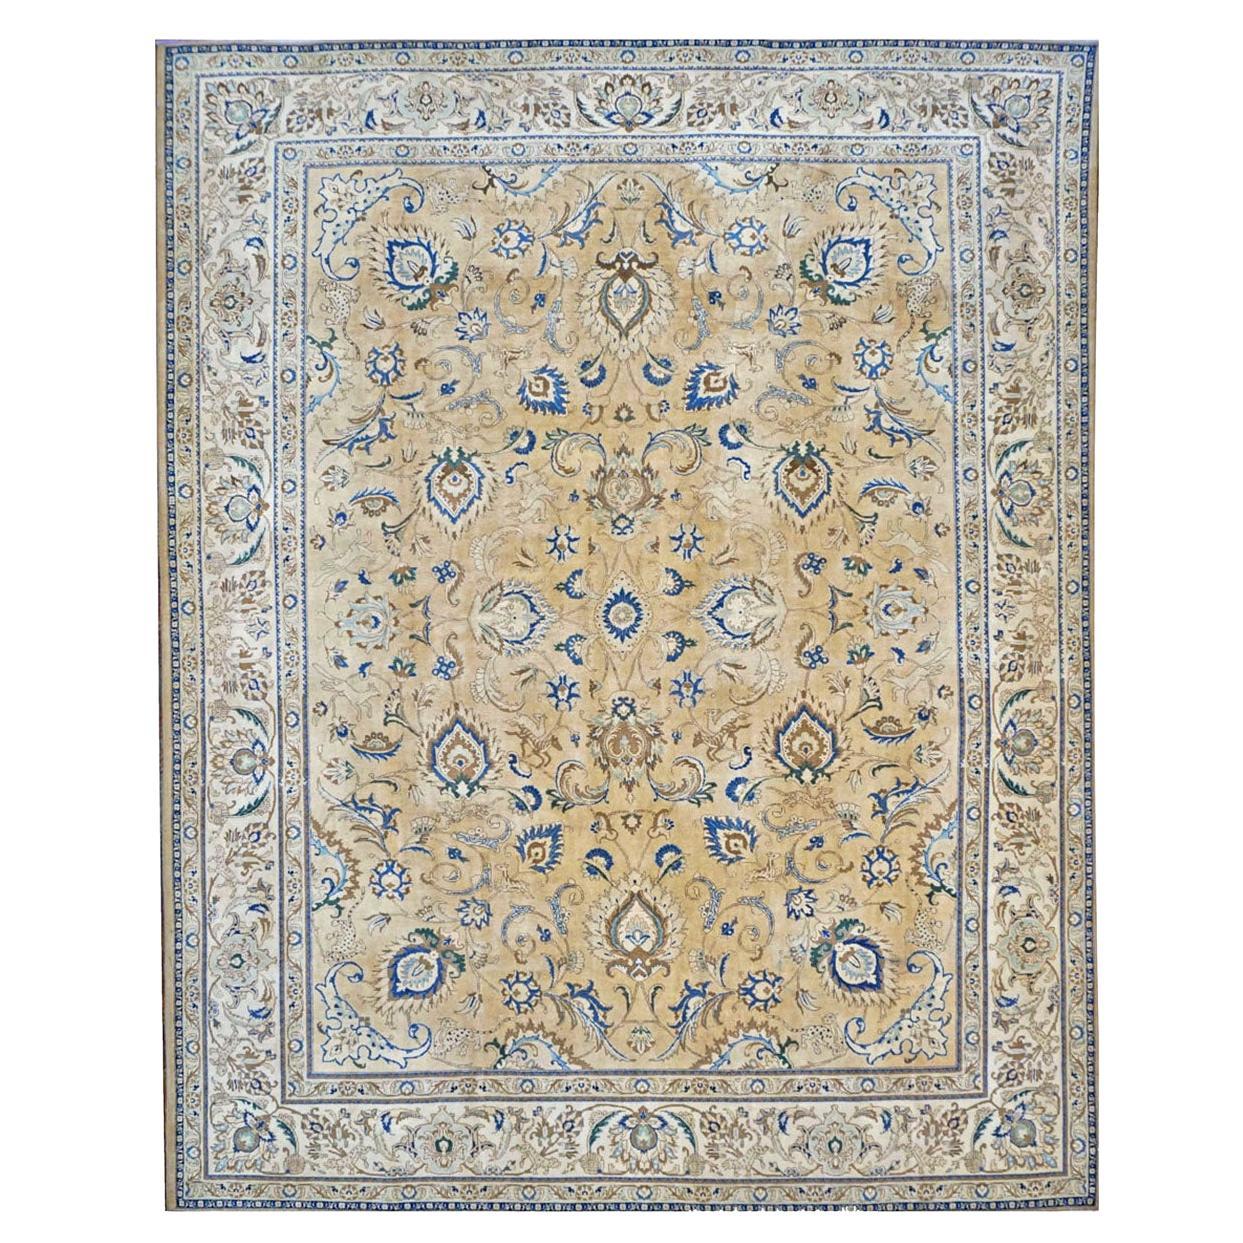 20th Century Antique Persian Tabriz 10x12 Tan, Ivory, & Blue Handmade Area Rug